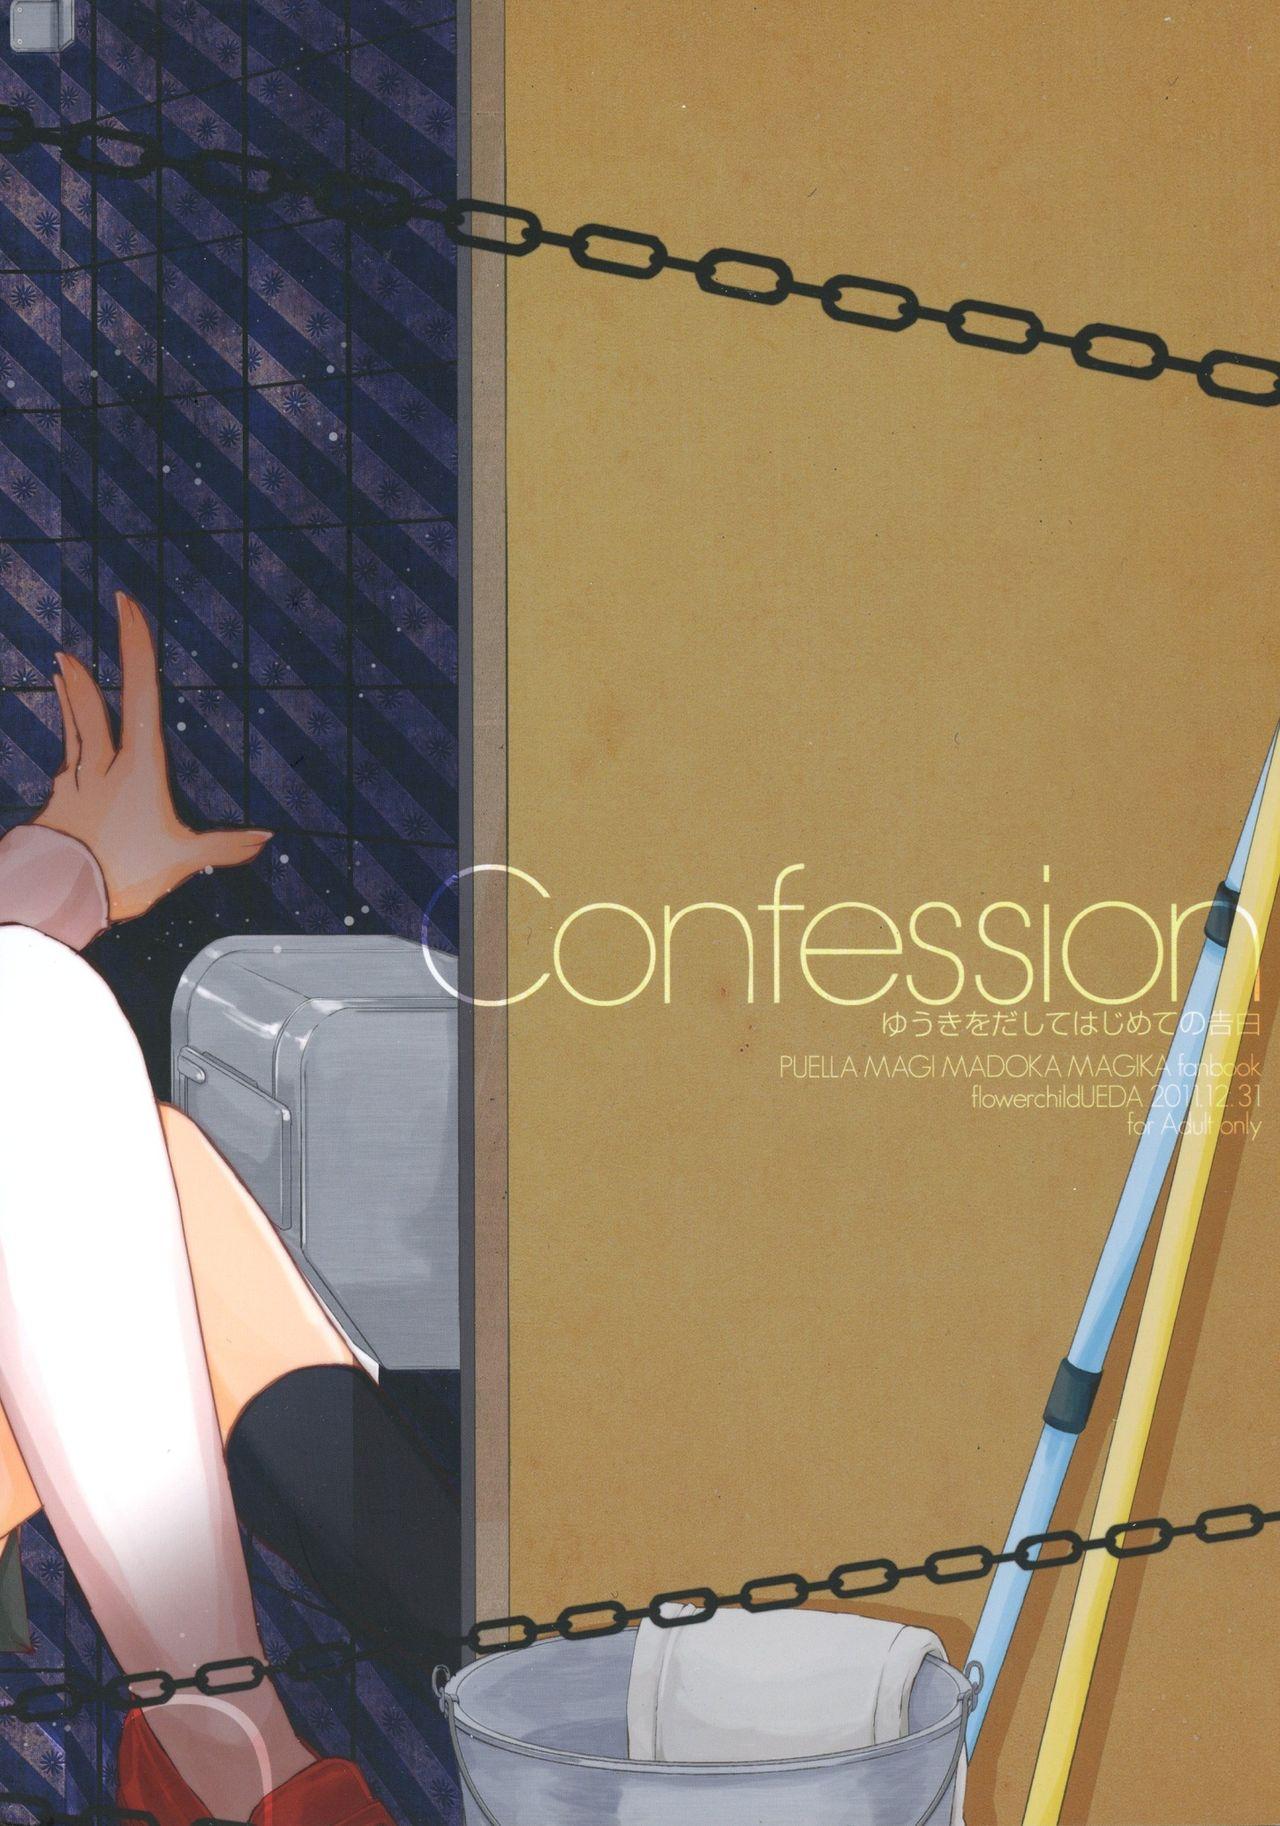 Confession 24